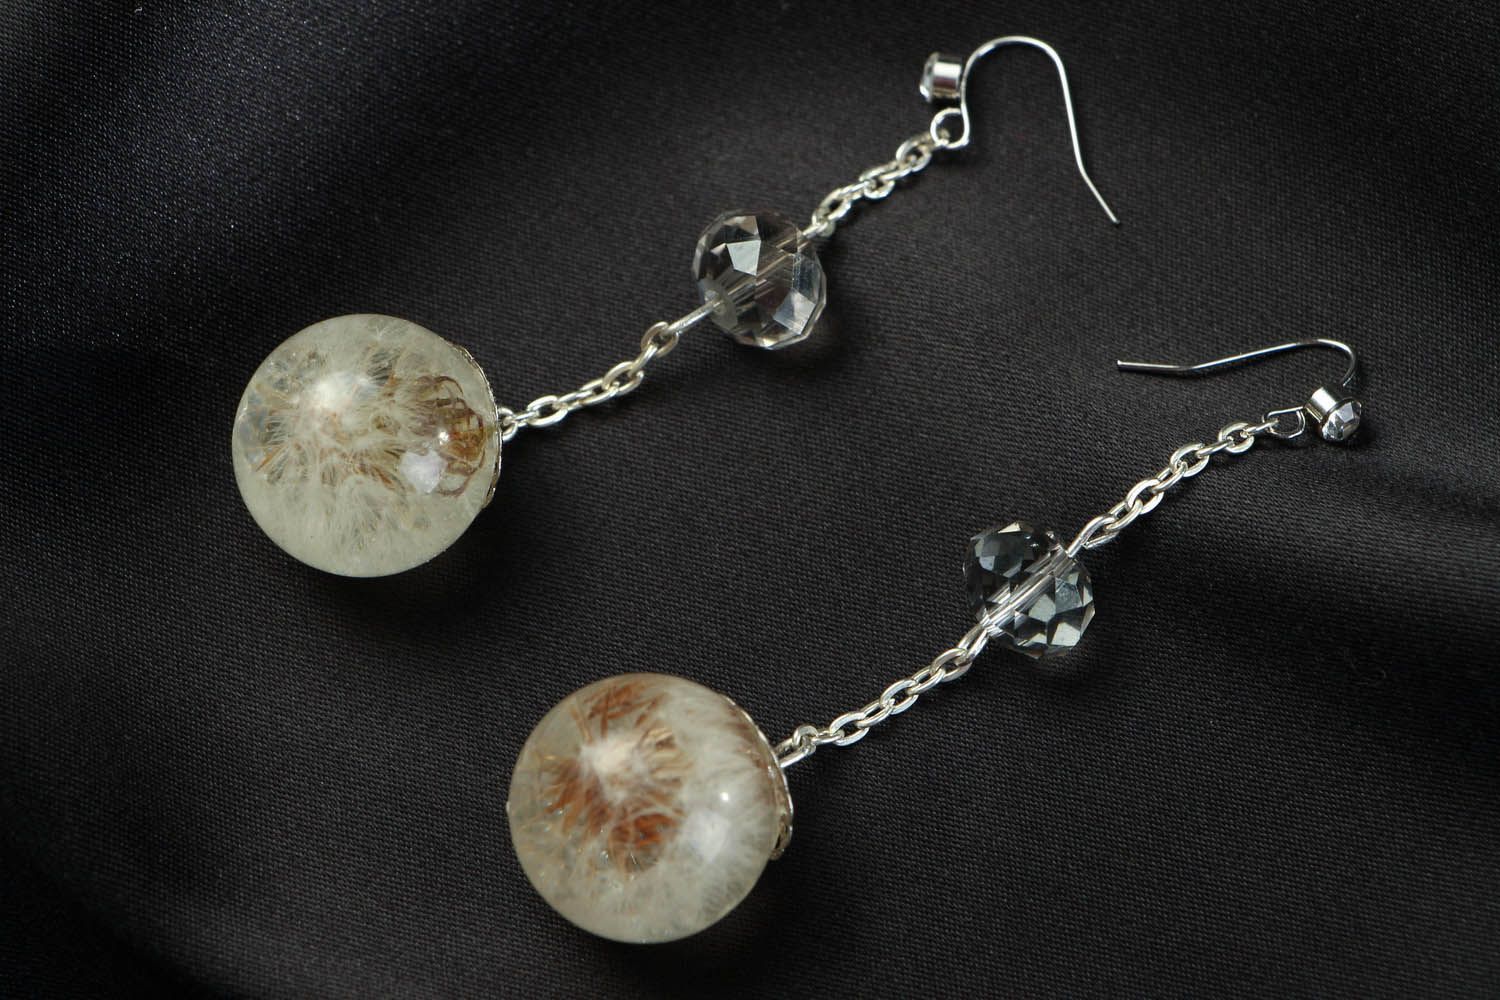 Earrings with dandelions in epoxy resin photo 1